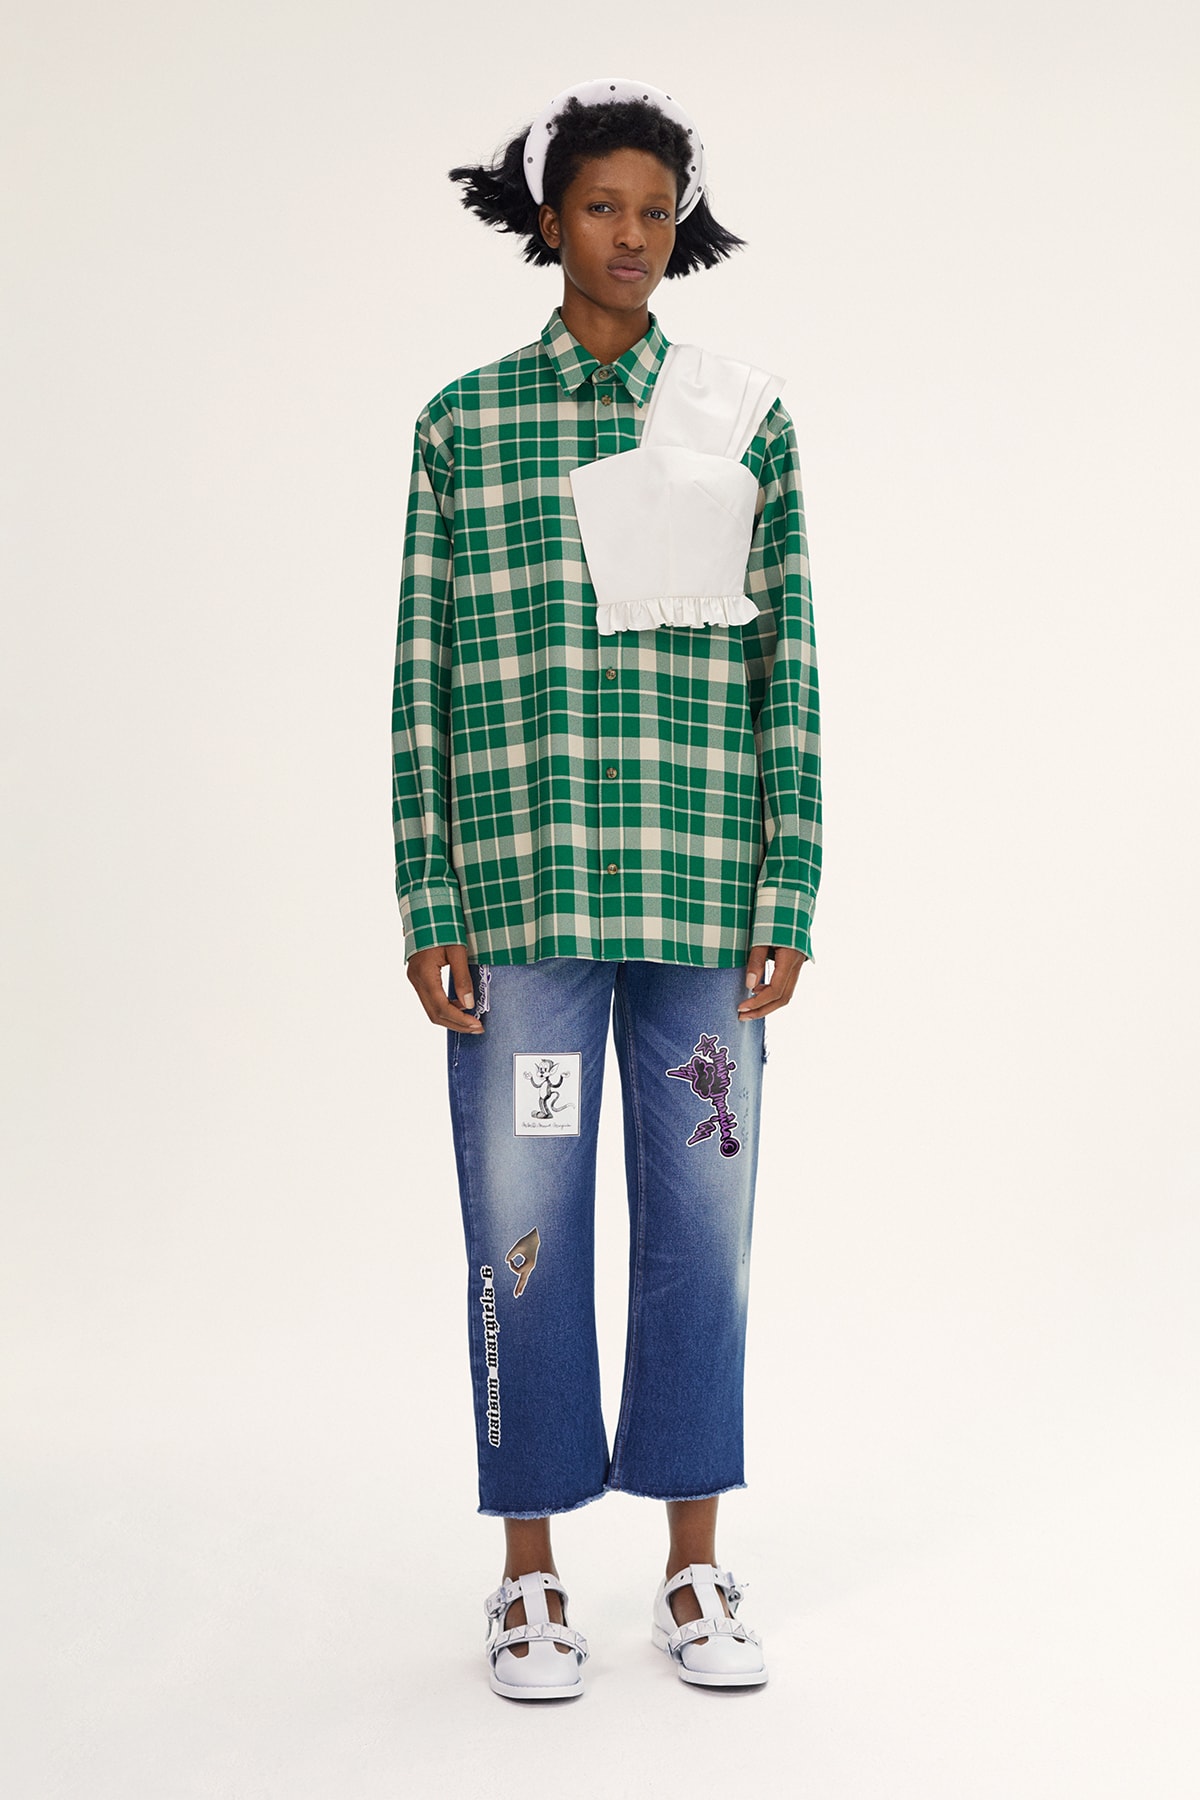 MM6 Maison Margiela Spring/Summer 2020 Collection Lookbook Plaid Shirt Green Patchwork Jeans